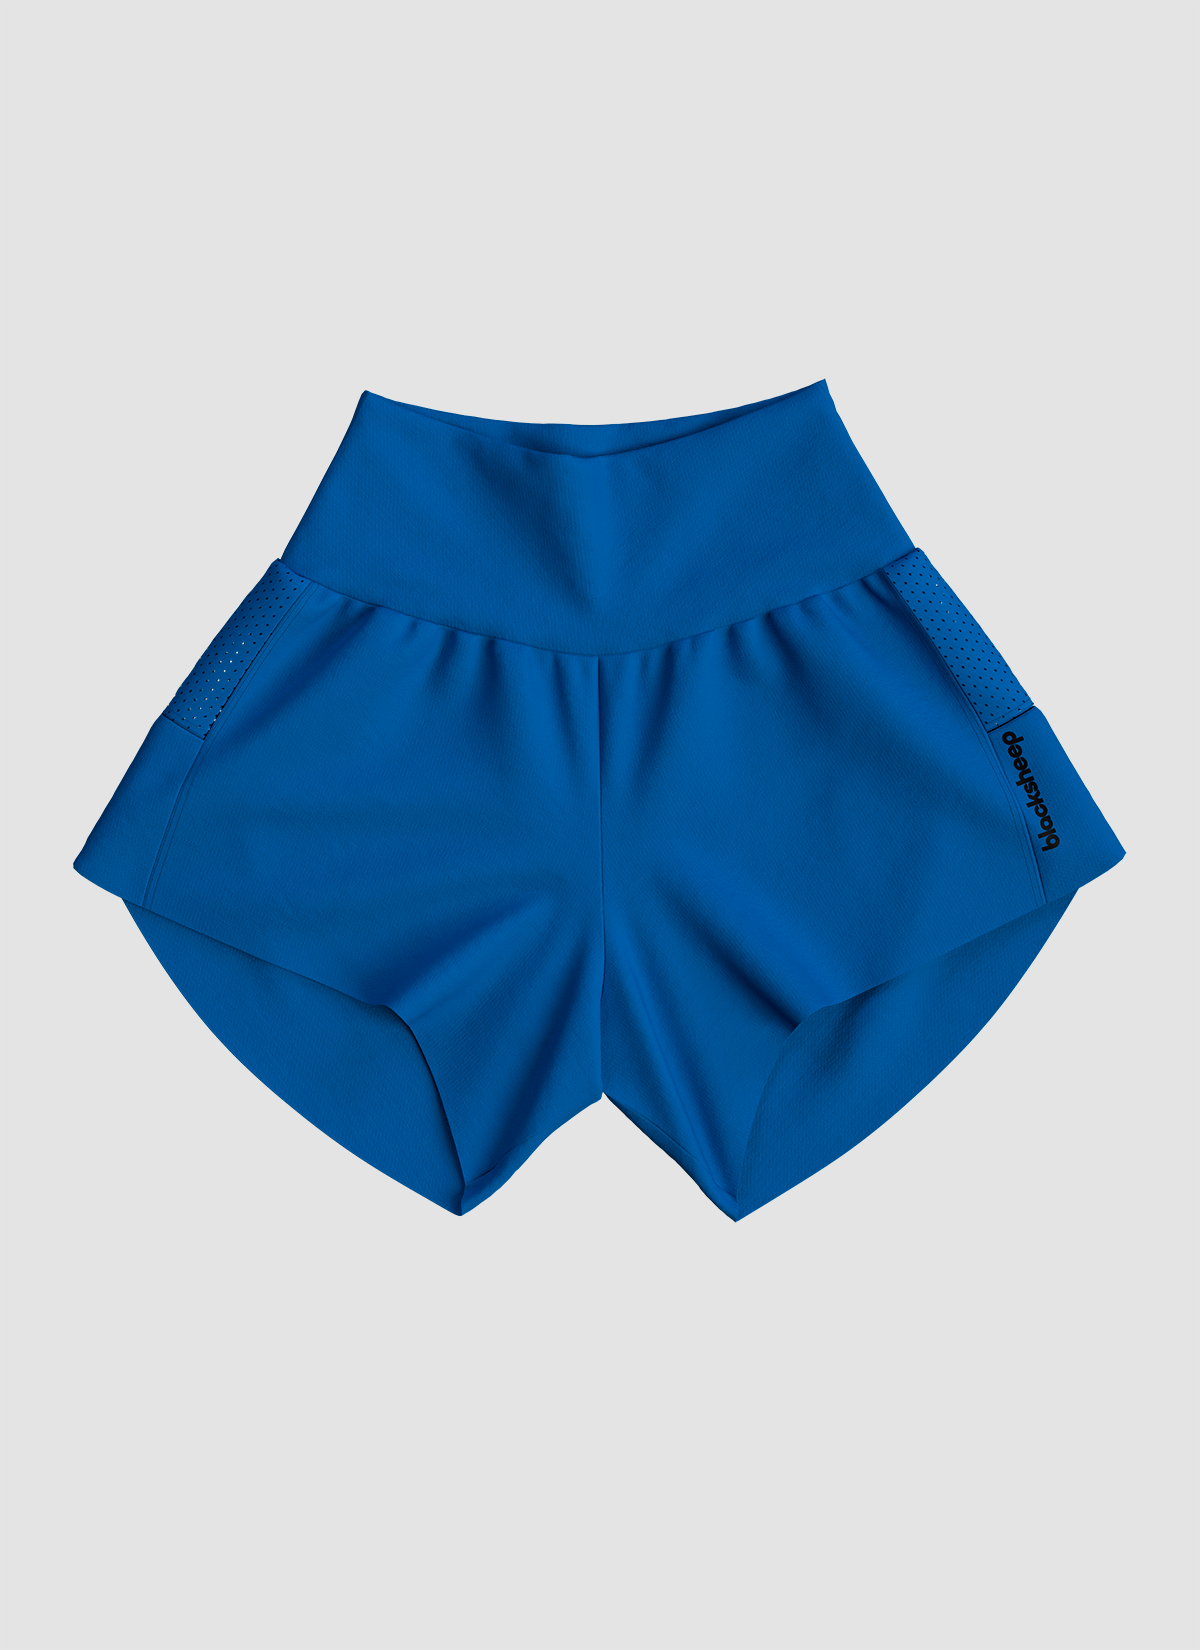 Women's Dry 4" Short - Victoria Blue